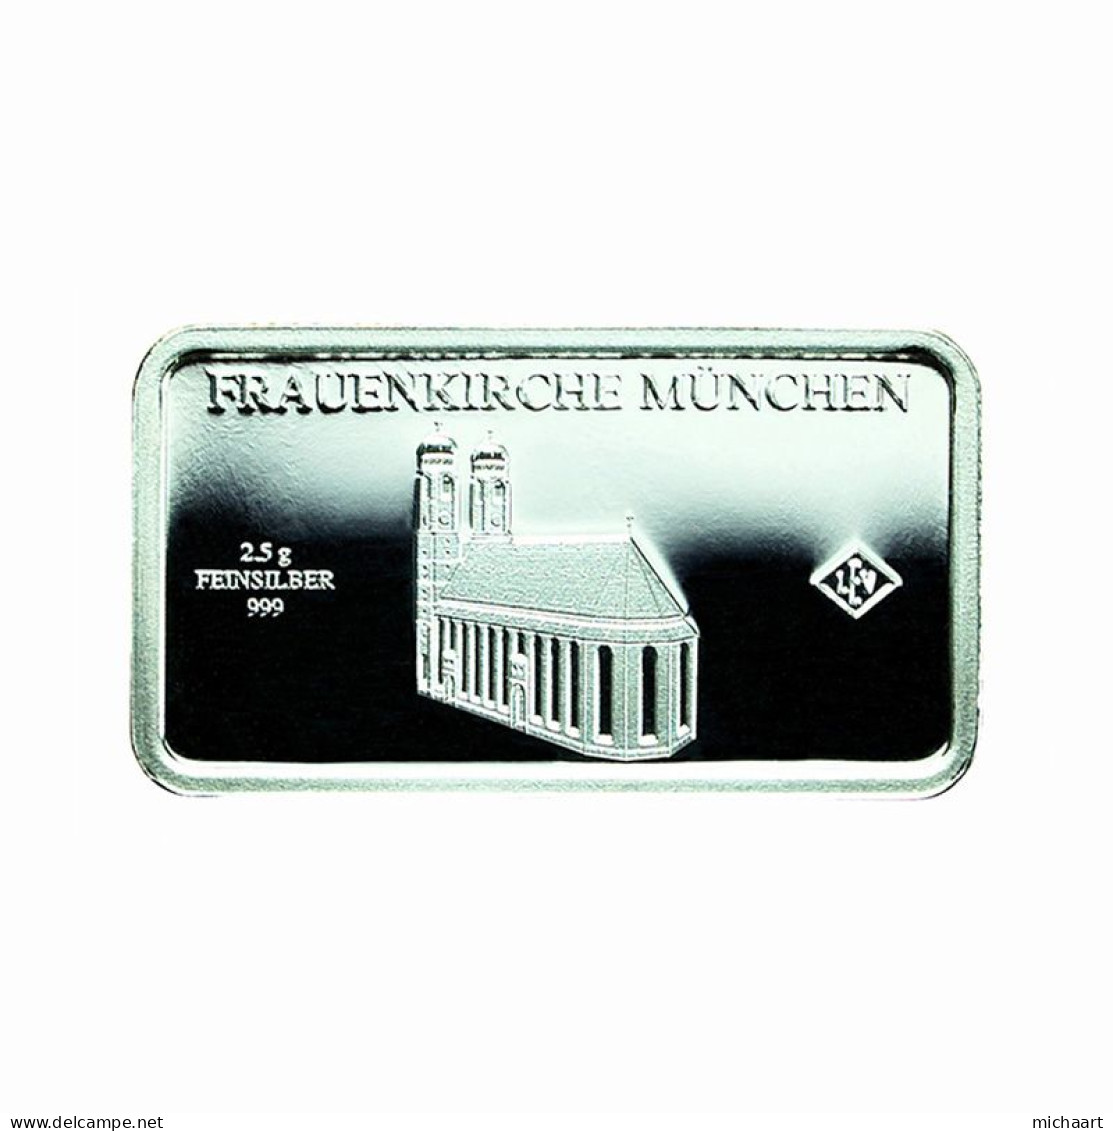 Germany Silver Ingot Bar Proof 2.5g Landmarks Munich Frauenkirche 03850 - Commemorative